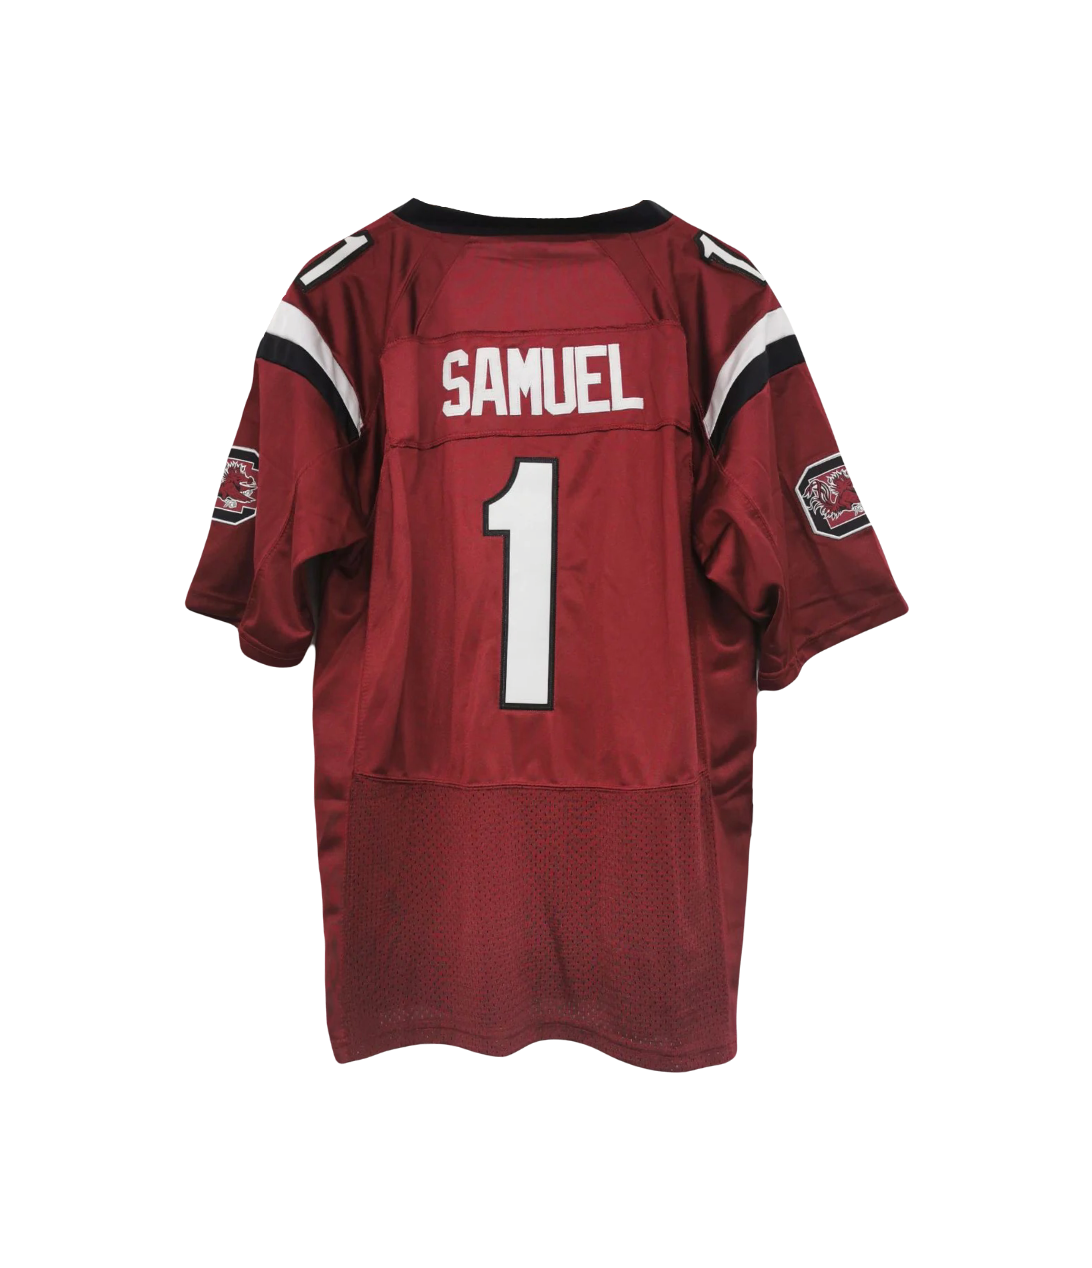 Deebo Samuel South Carolina Gamecocks Under Armour NCAA College Football Classic Home Jersey